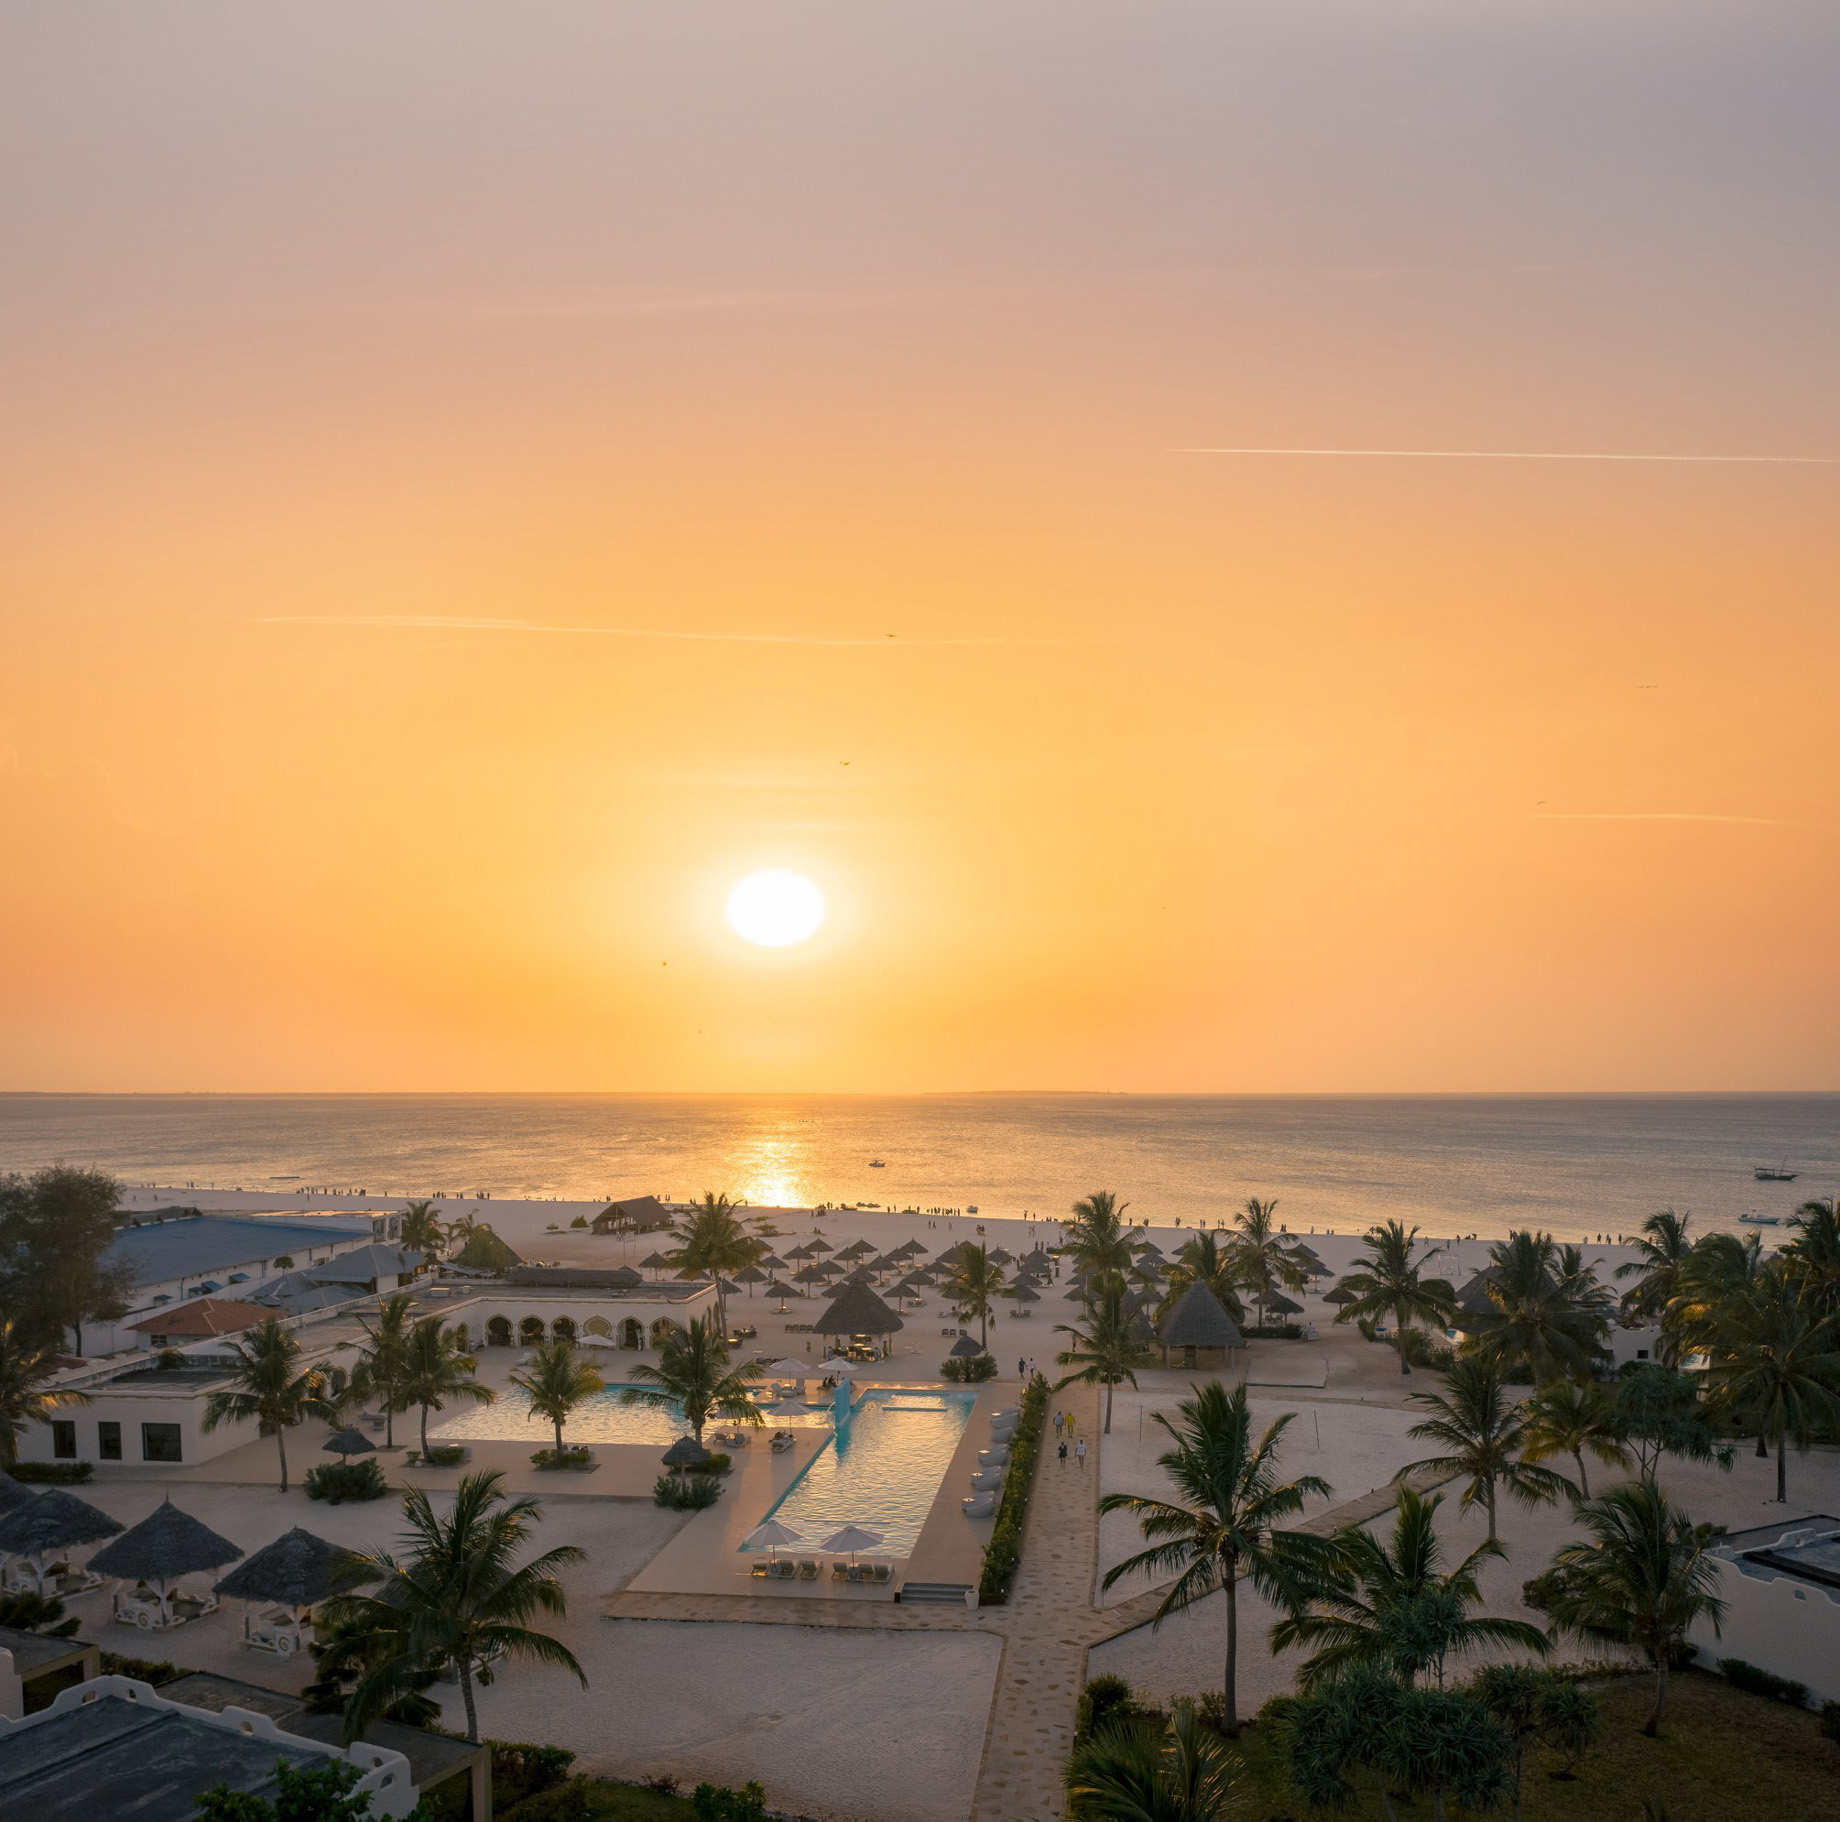 Gold Zanzibar Beach House & Spa Resort – Nungwi, Zanzibar, Tanzania – Resort Ocean View Aerial Sunset